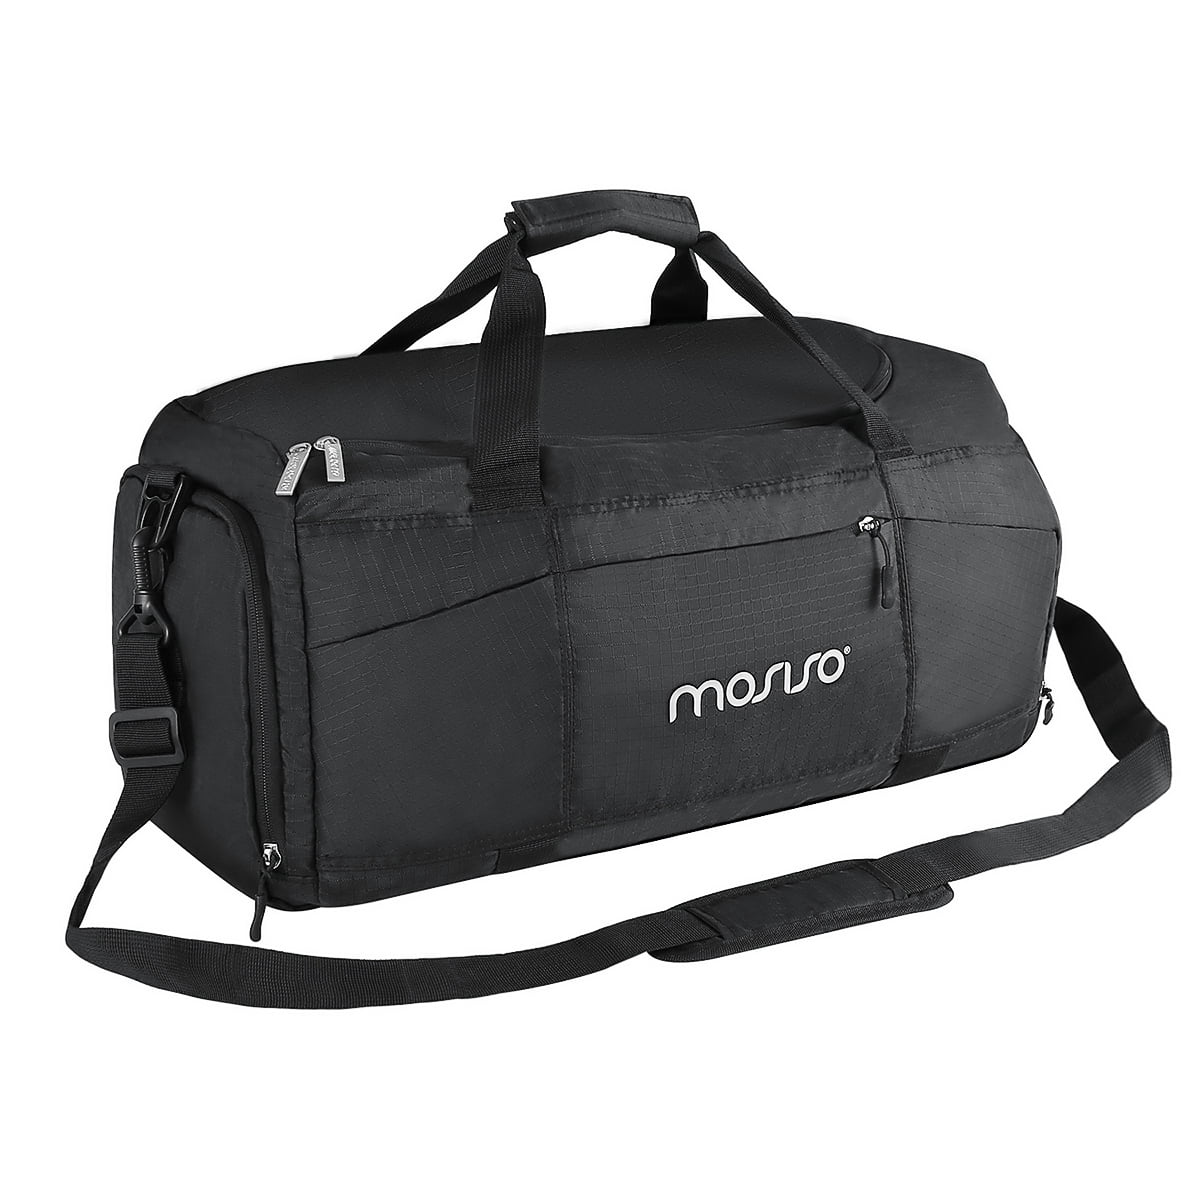 Mosiso Waterproof Sports Duffle Bag Gym Bag Travel Duffel with ...